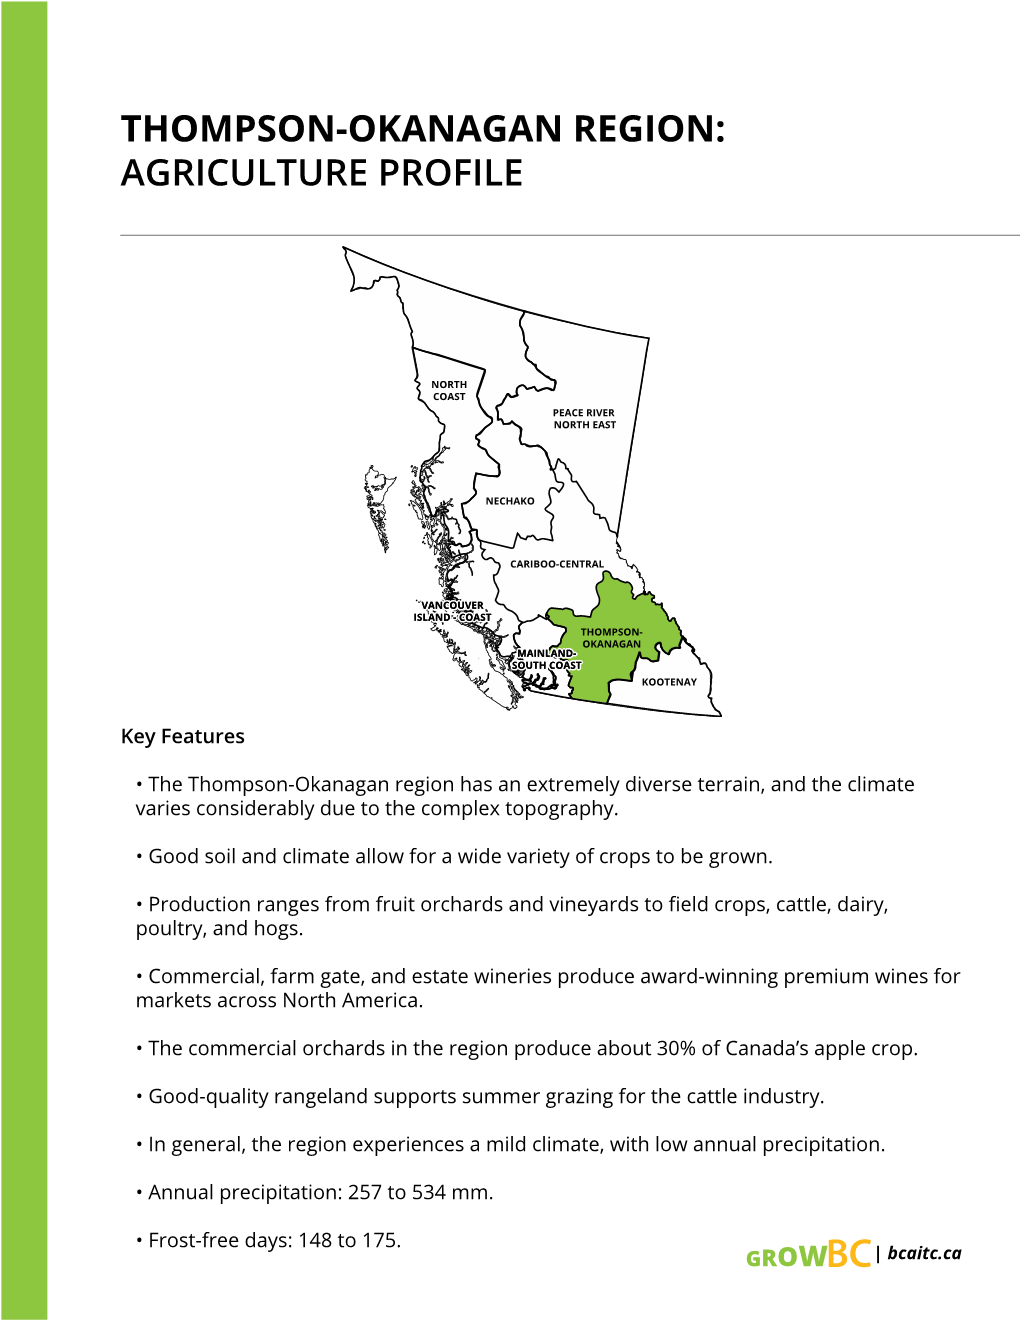 Thompson-Okanagan Region: Agriculture Profile